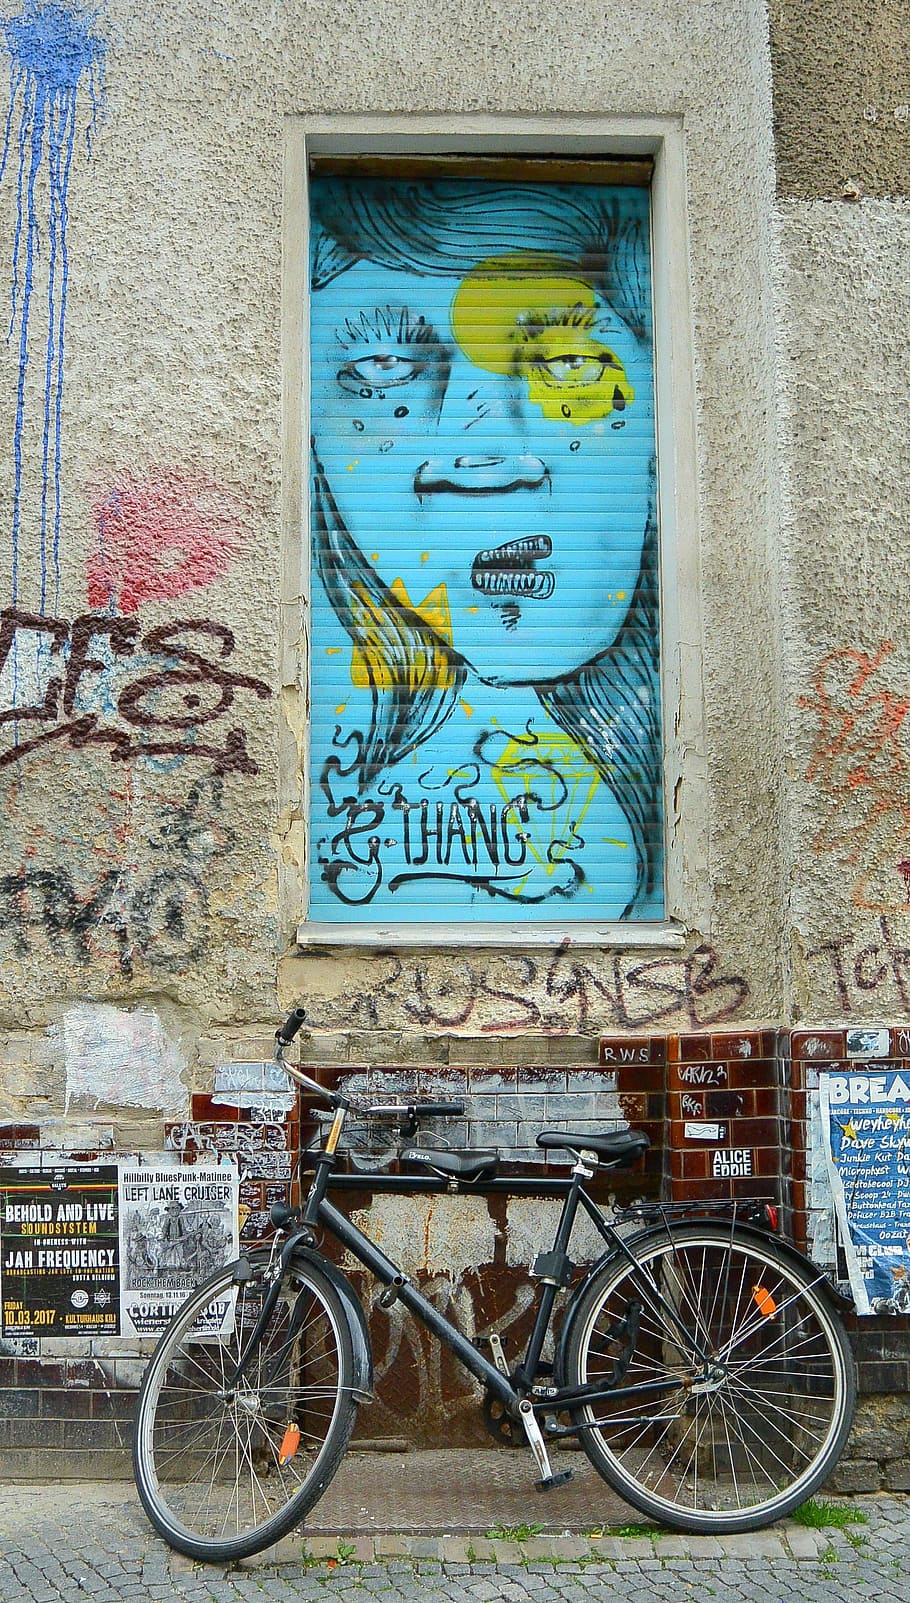 Arte callejero, Arte, Graffiti, Pintura mural, arte urbano, alternativa, rociador, berlín, kreuzberg, mujer